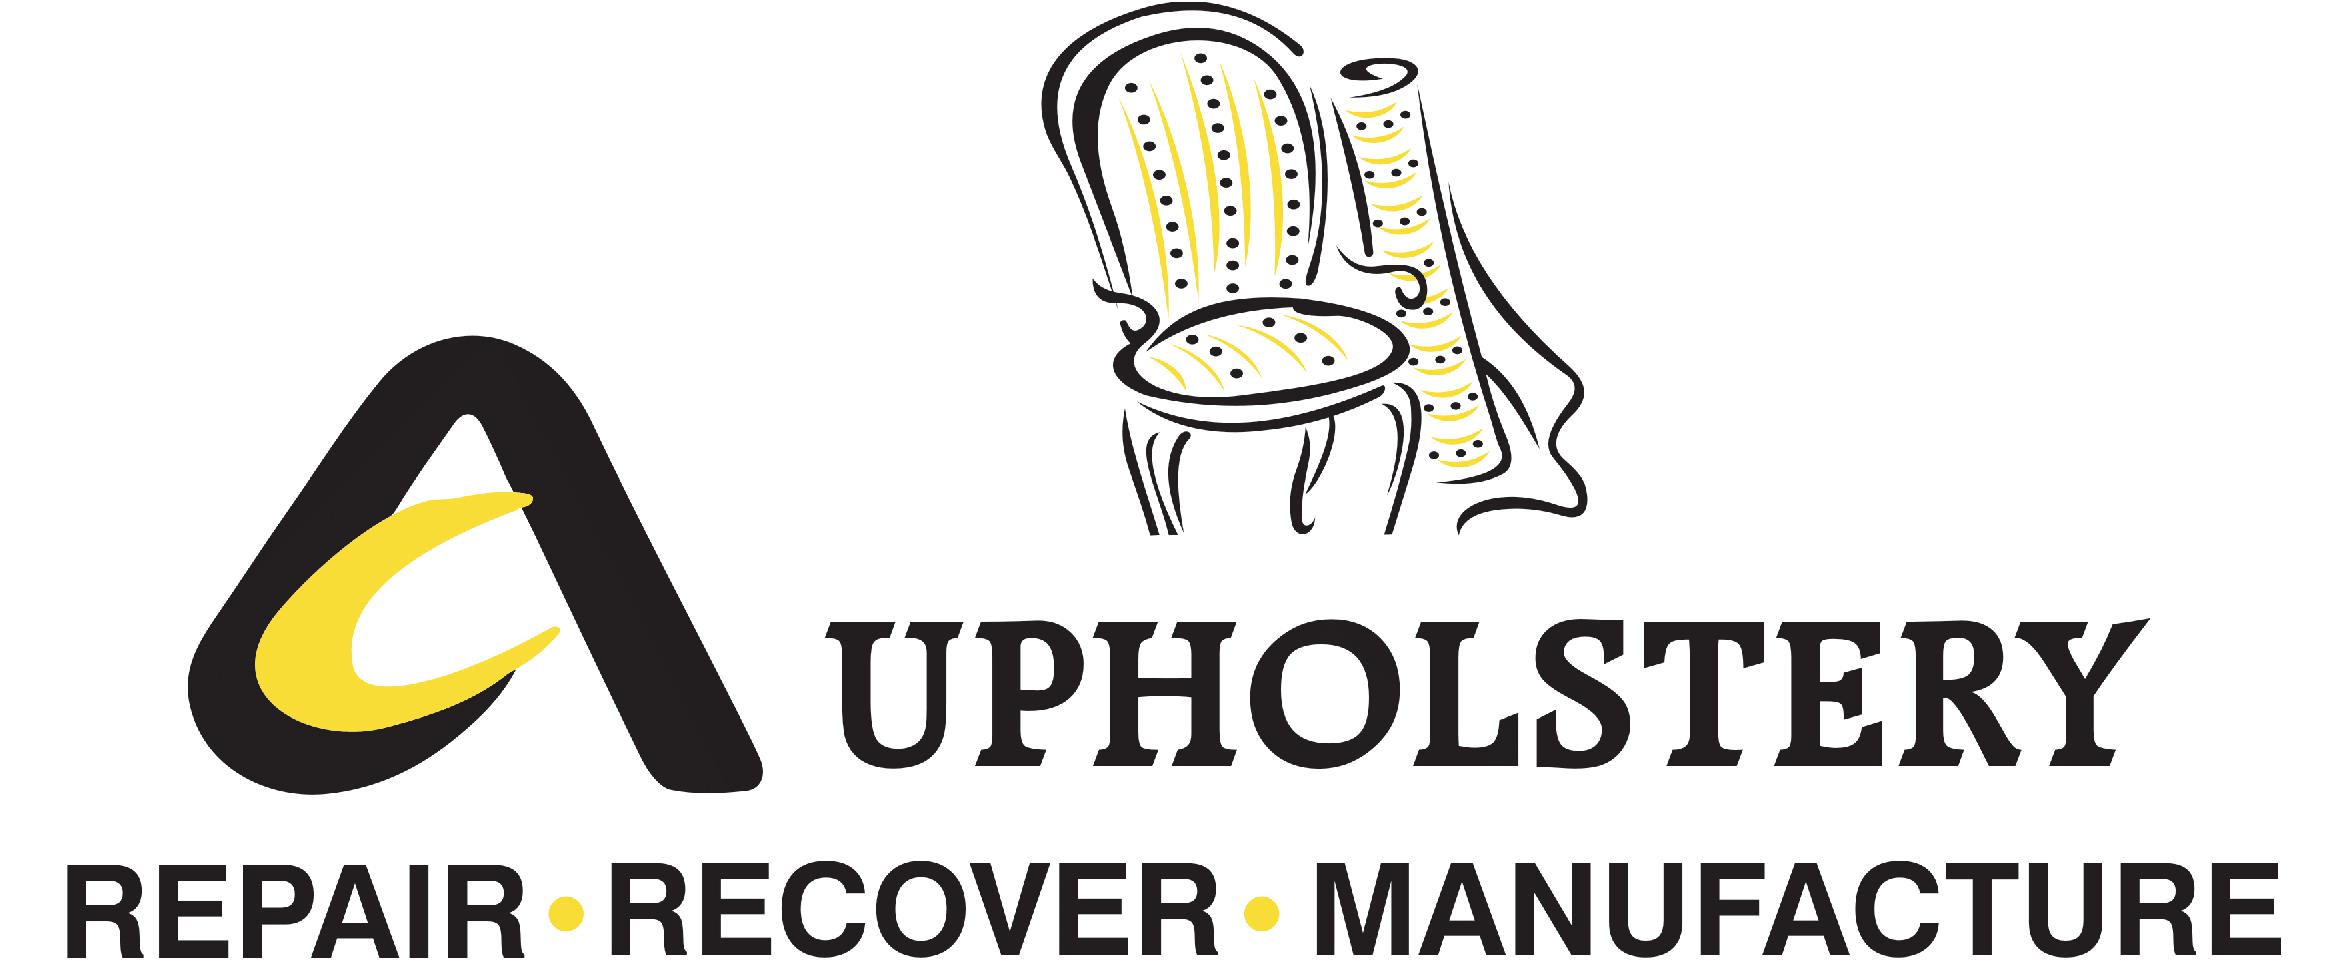 A&C Upholstery Logo